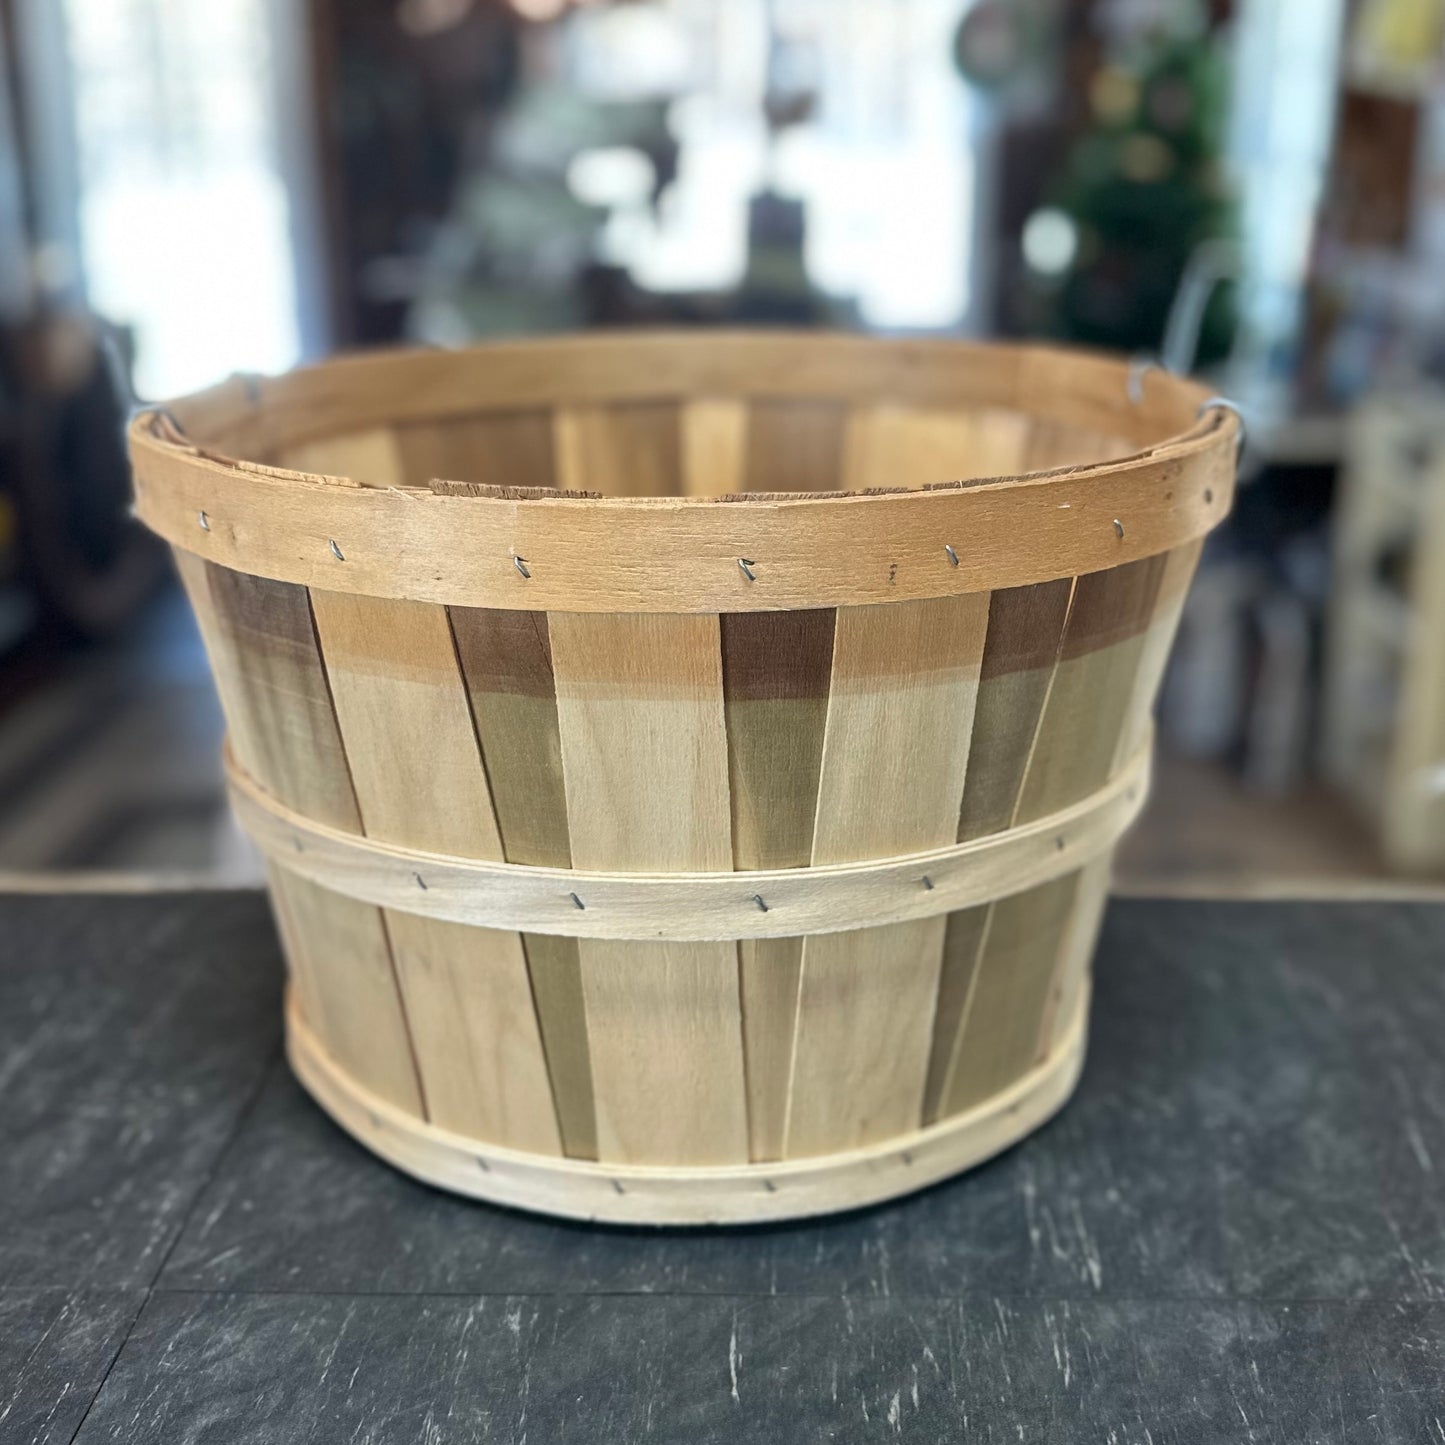 Wooden Baskets